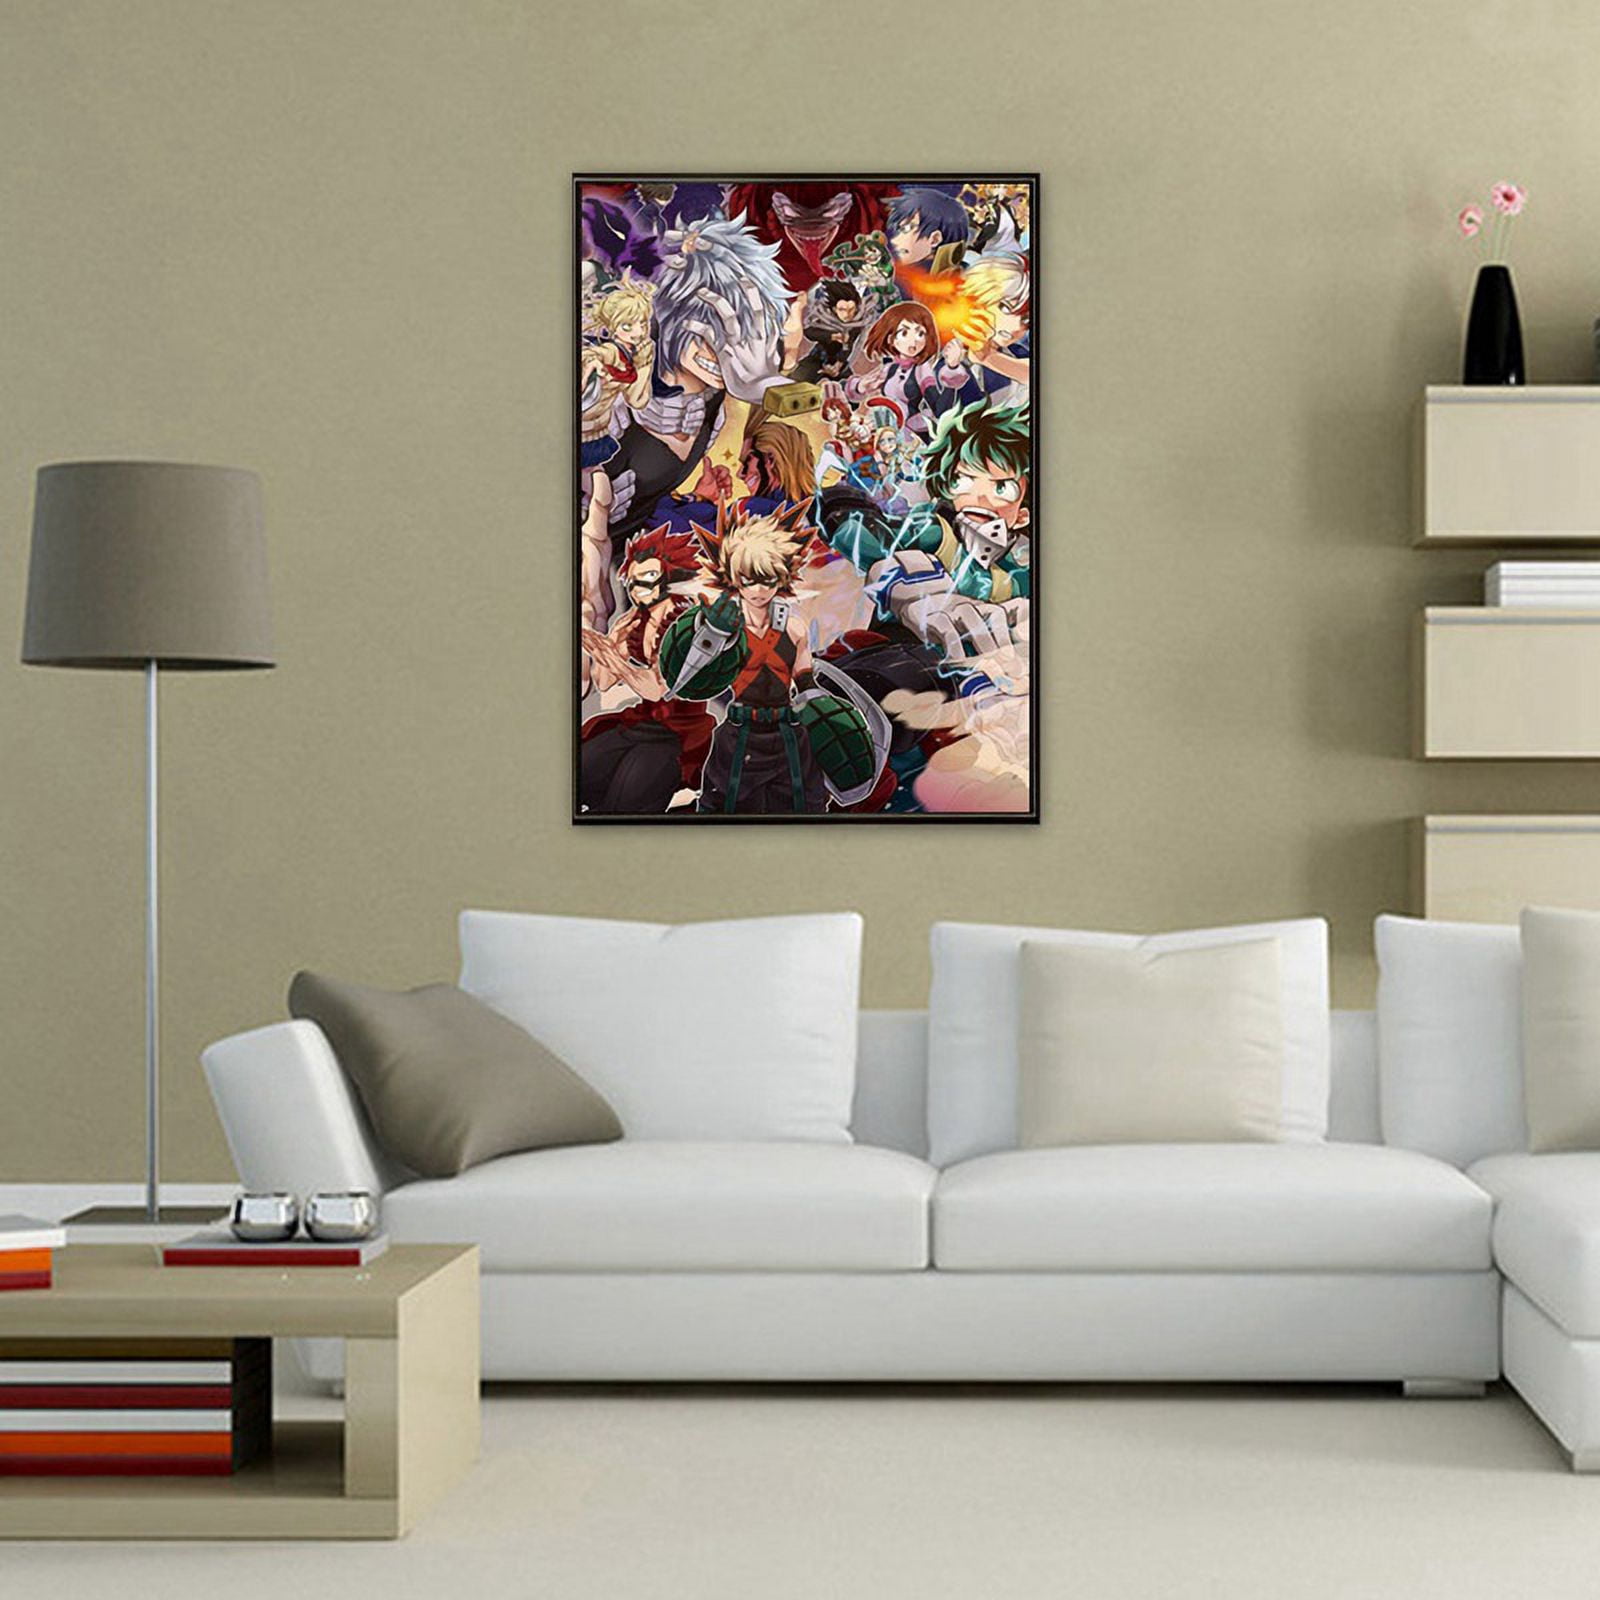 Amazon.com: SEAREE Anime Poster, Japanese Anime Wall Art Posters, Anime  Wall Decor, 5 Pcs HD Canvas Printing Posters for Living Room, Bedroom, Club Wall  Art Decor, No Frame.…: Posters & Prints